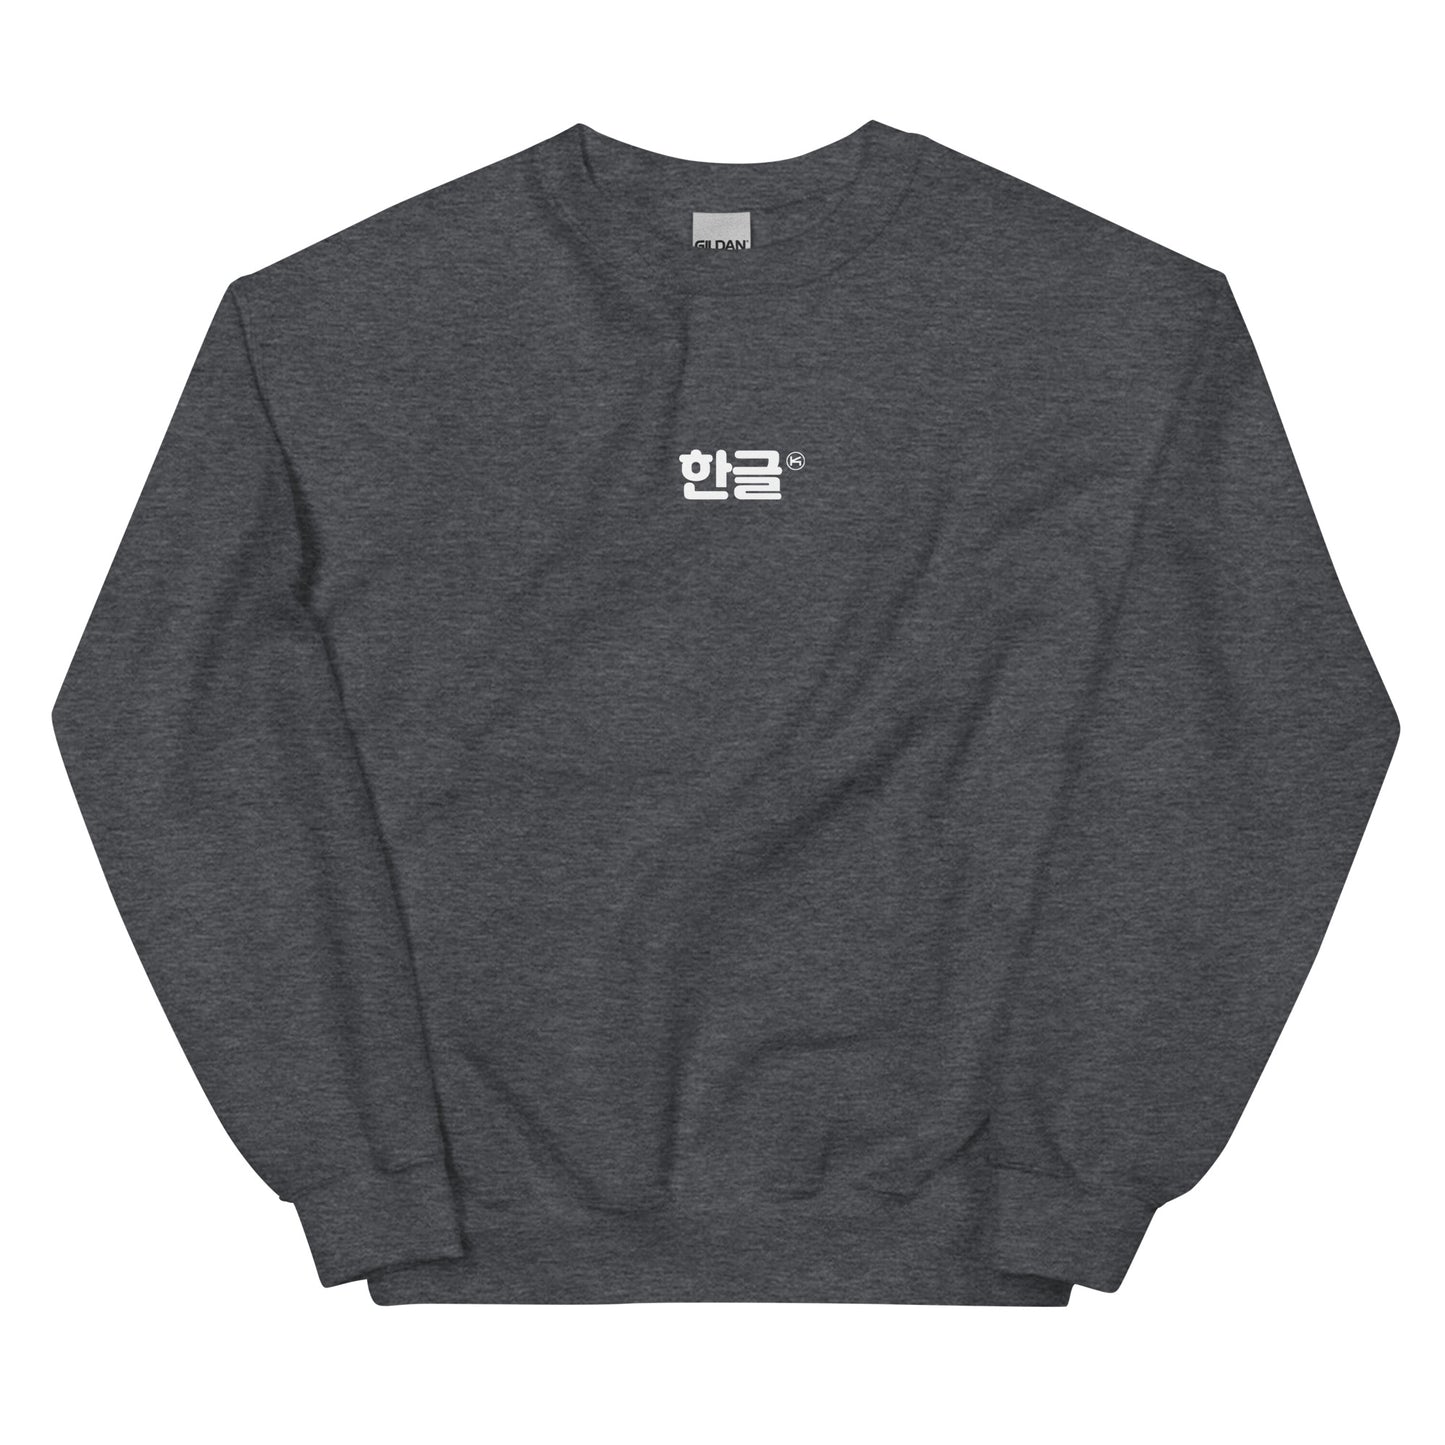 Hangul in Korean Hangul Kpop Merch Unisex Sweatshirt